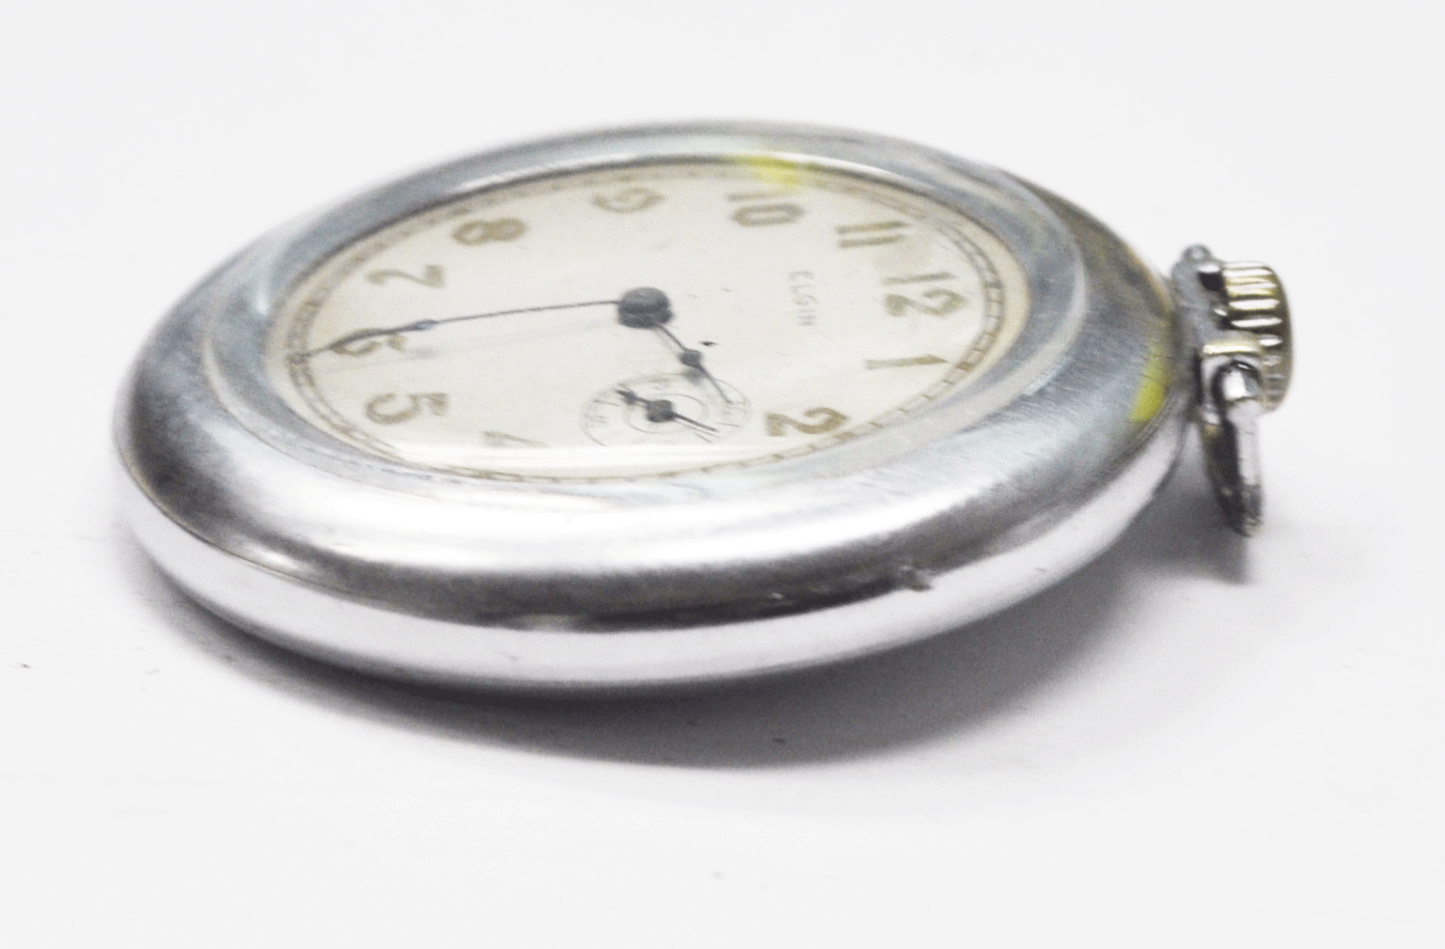 1909 Elgin Size 6 Grade 295 Pocket Watch Oversized Case 3 O'clock Second Hand